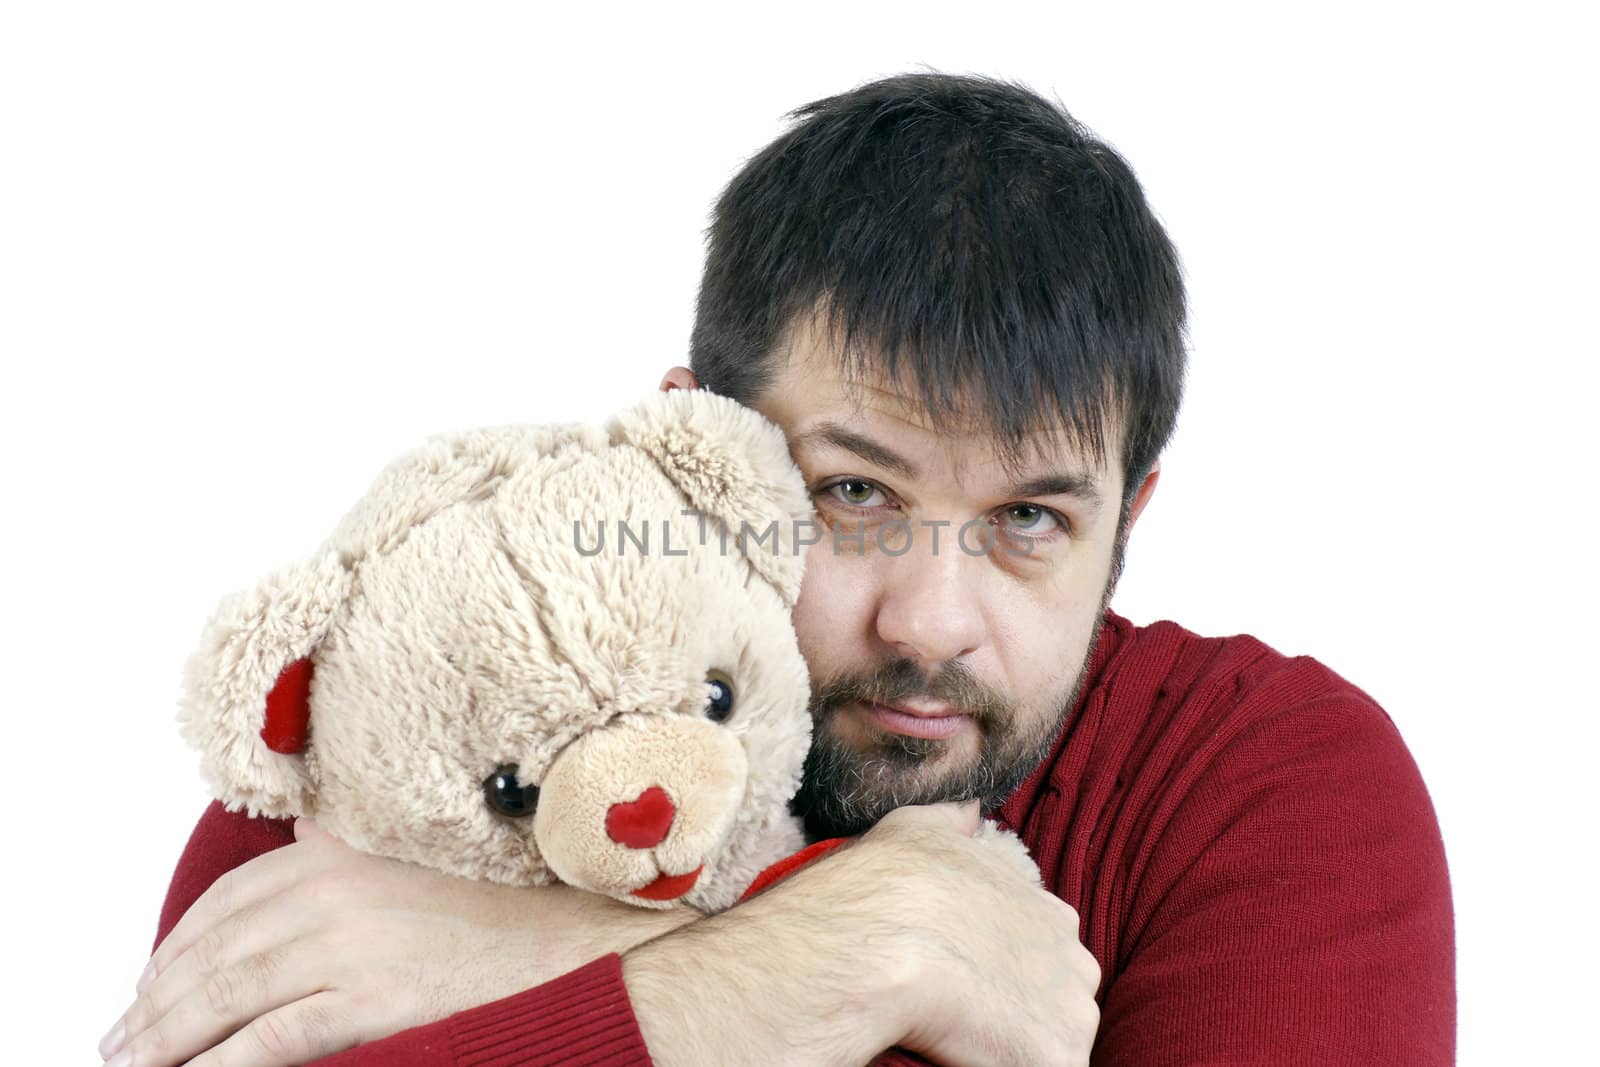 Guy hugging teddy bear by Mirage3